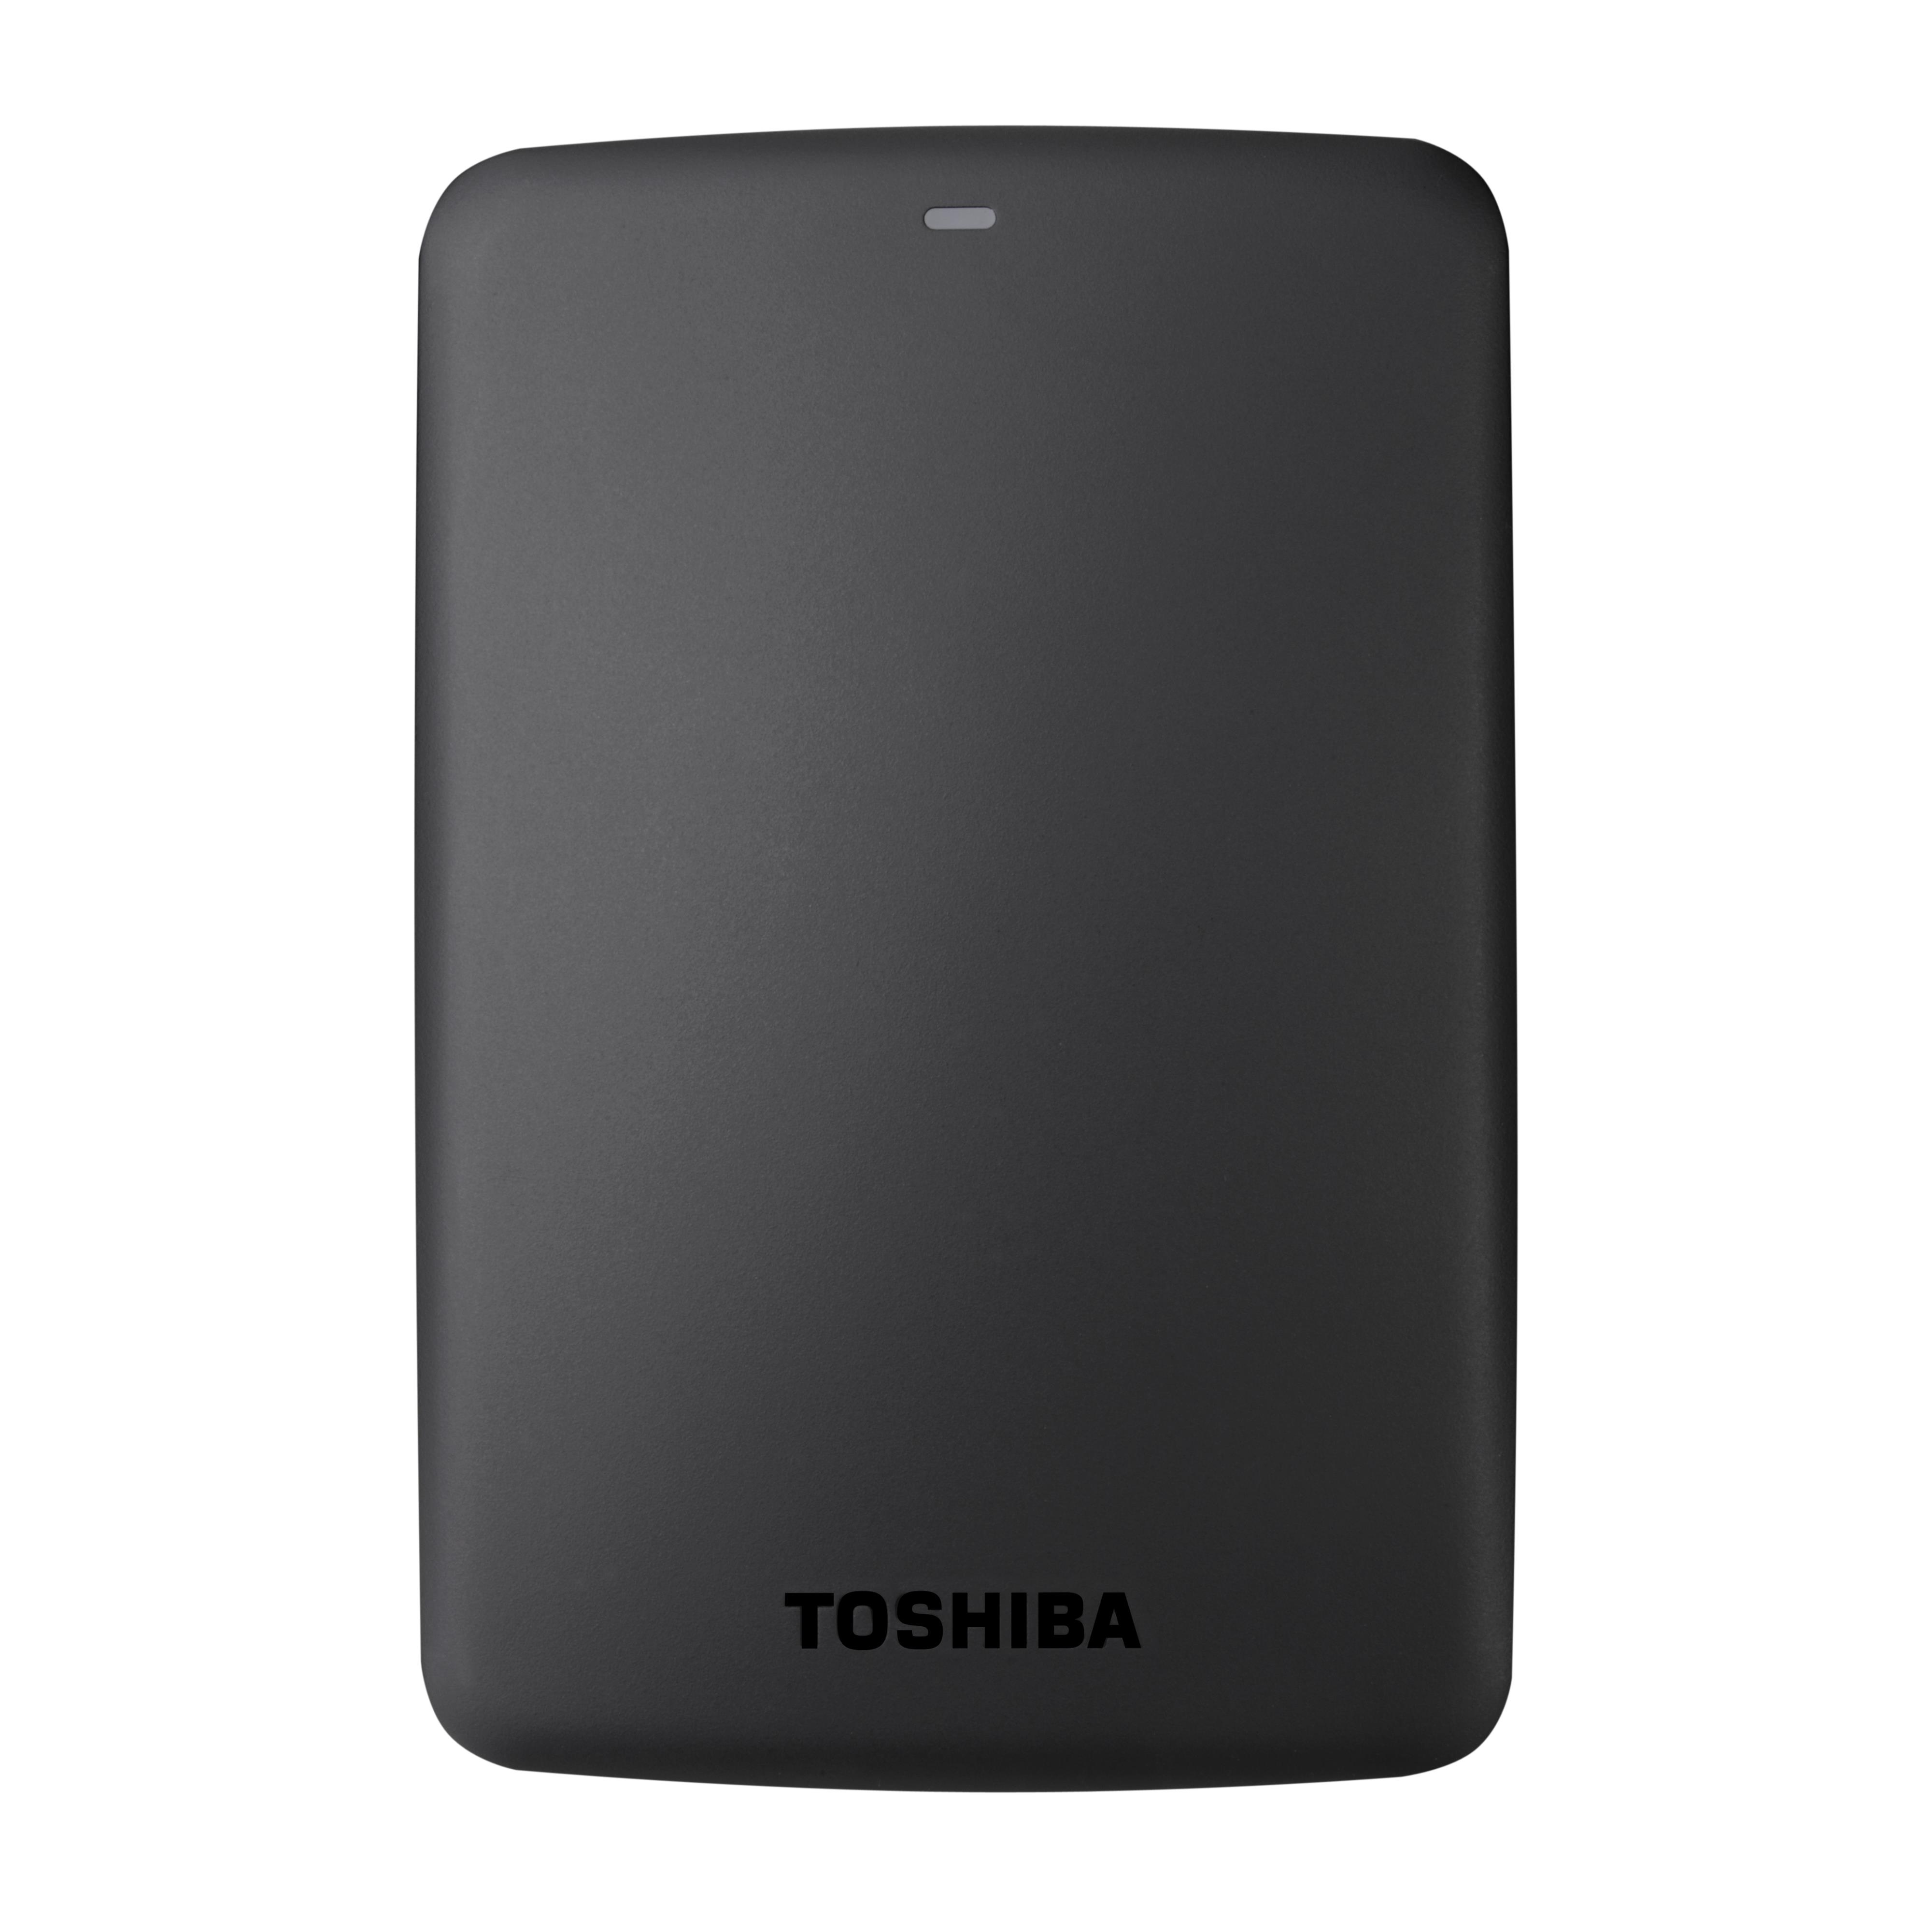 toshiba external hard drive 1tb driver download